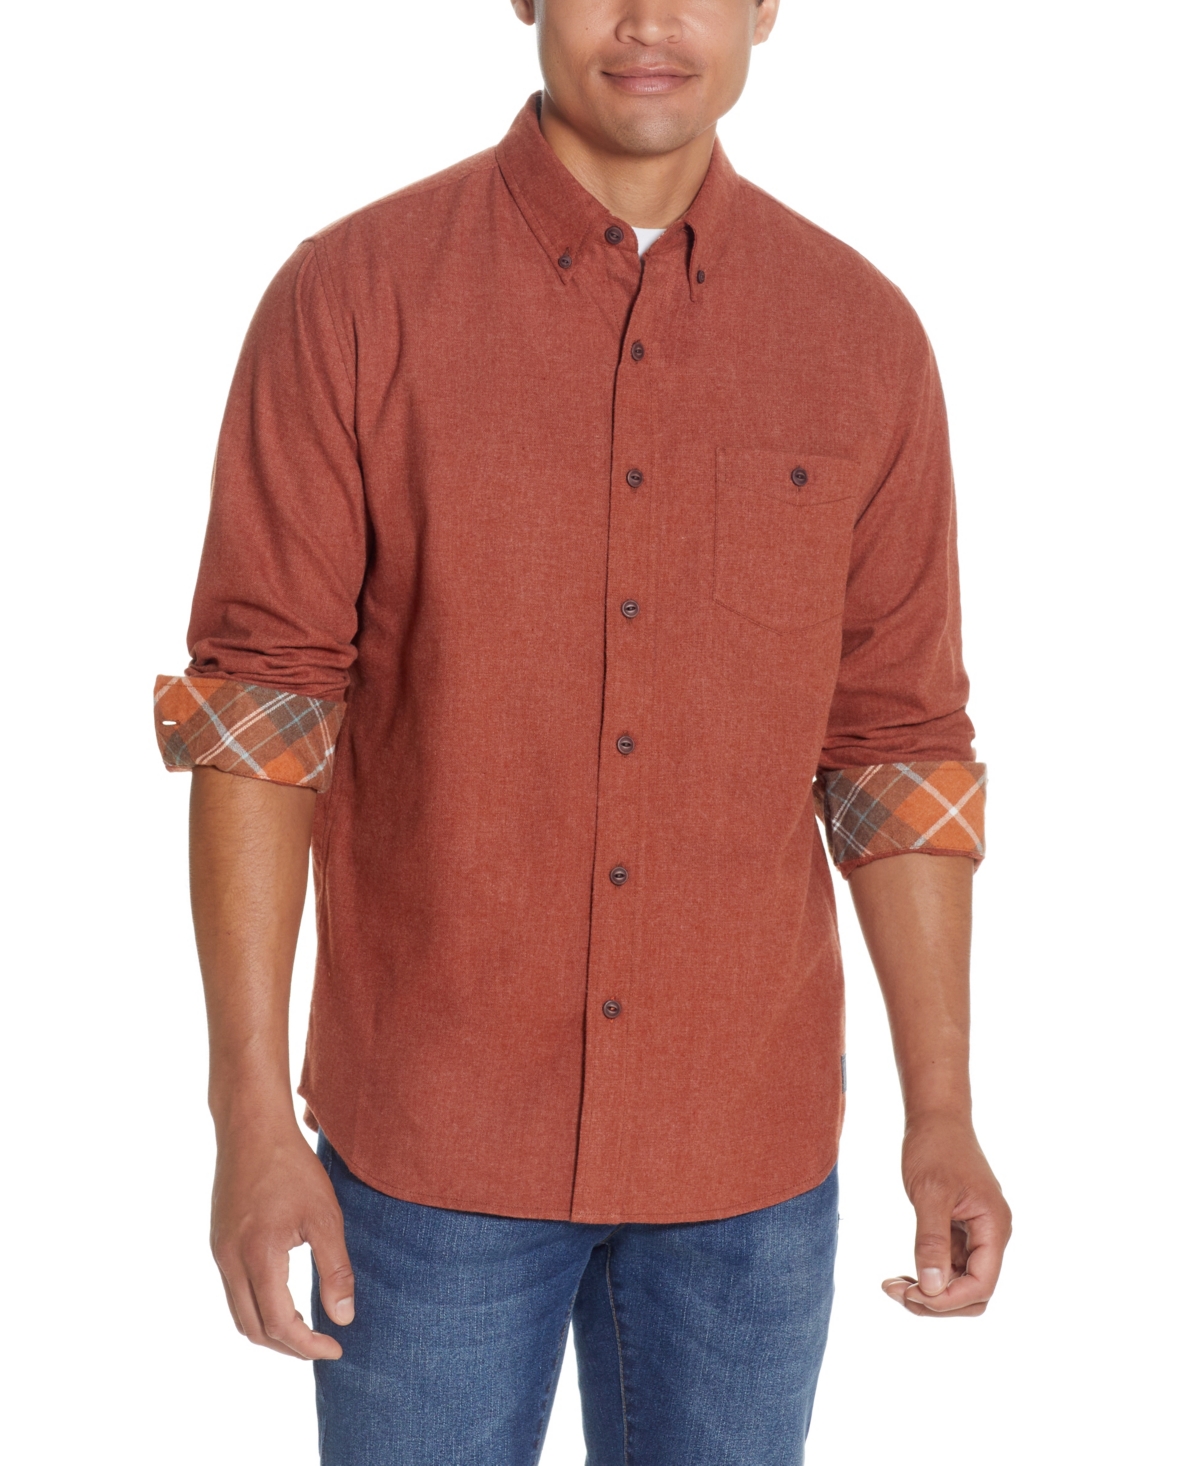 Men's Brushed Antique-Like Solid Flannel Shirt - Spice